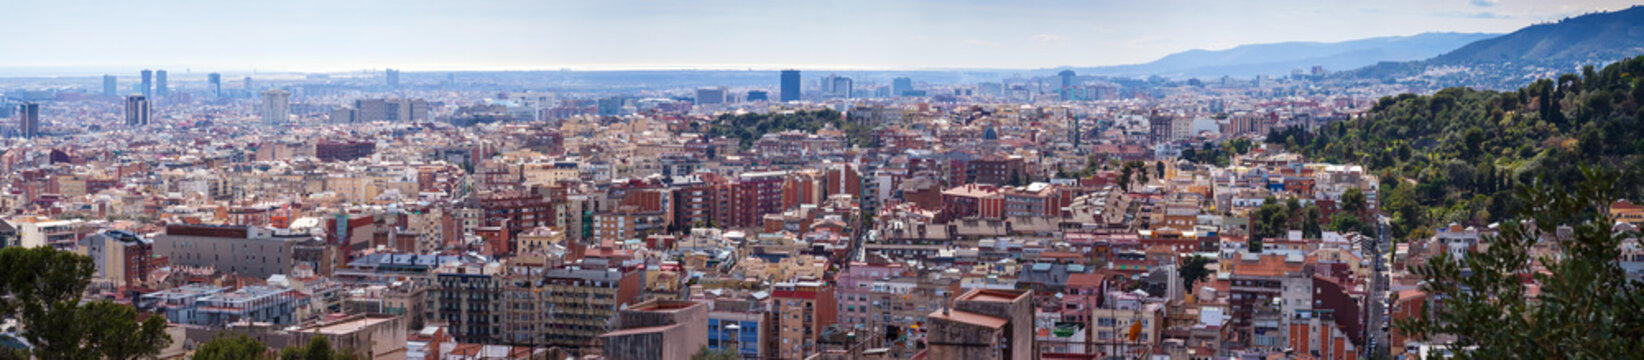 panoramic view of  metropolitan area. Barcelona